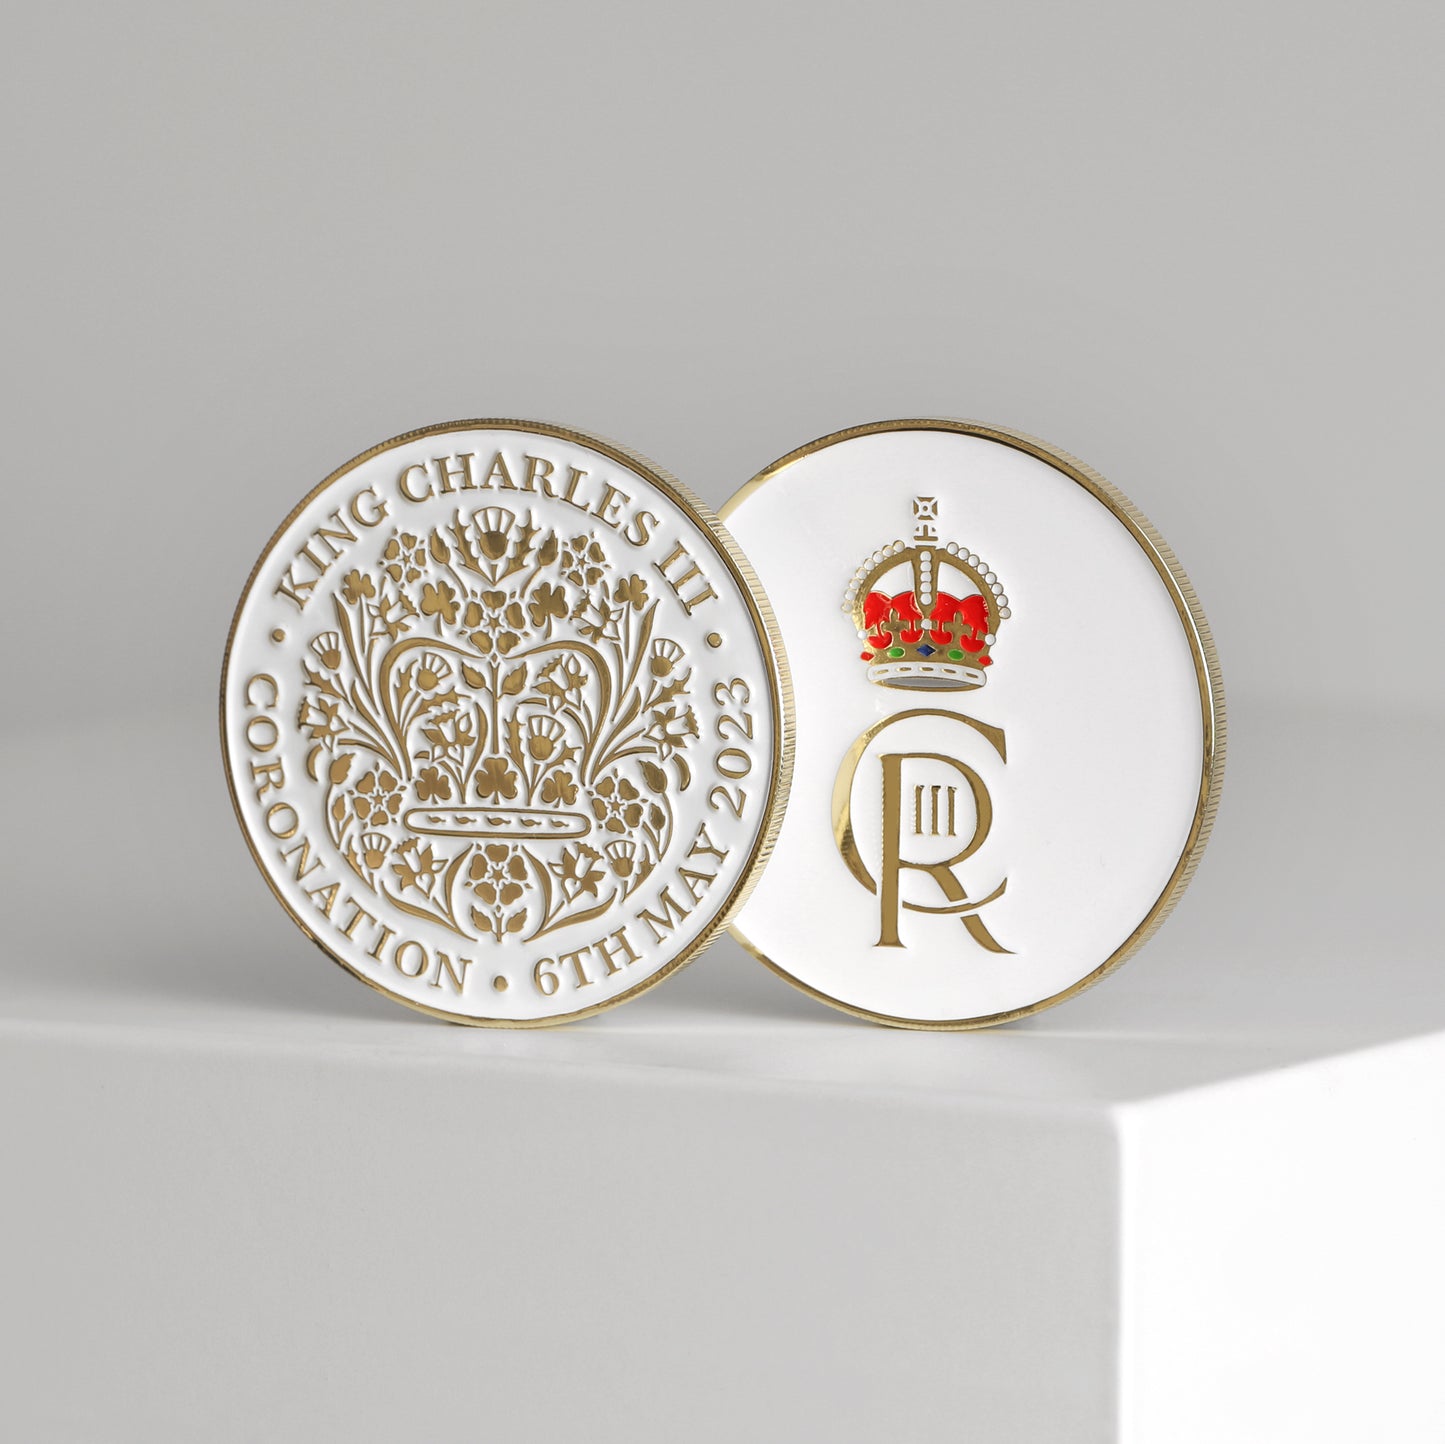 King Charles III Coronation Coin